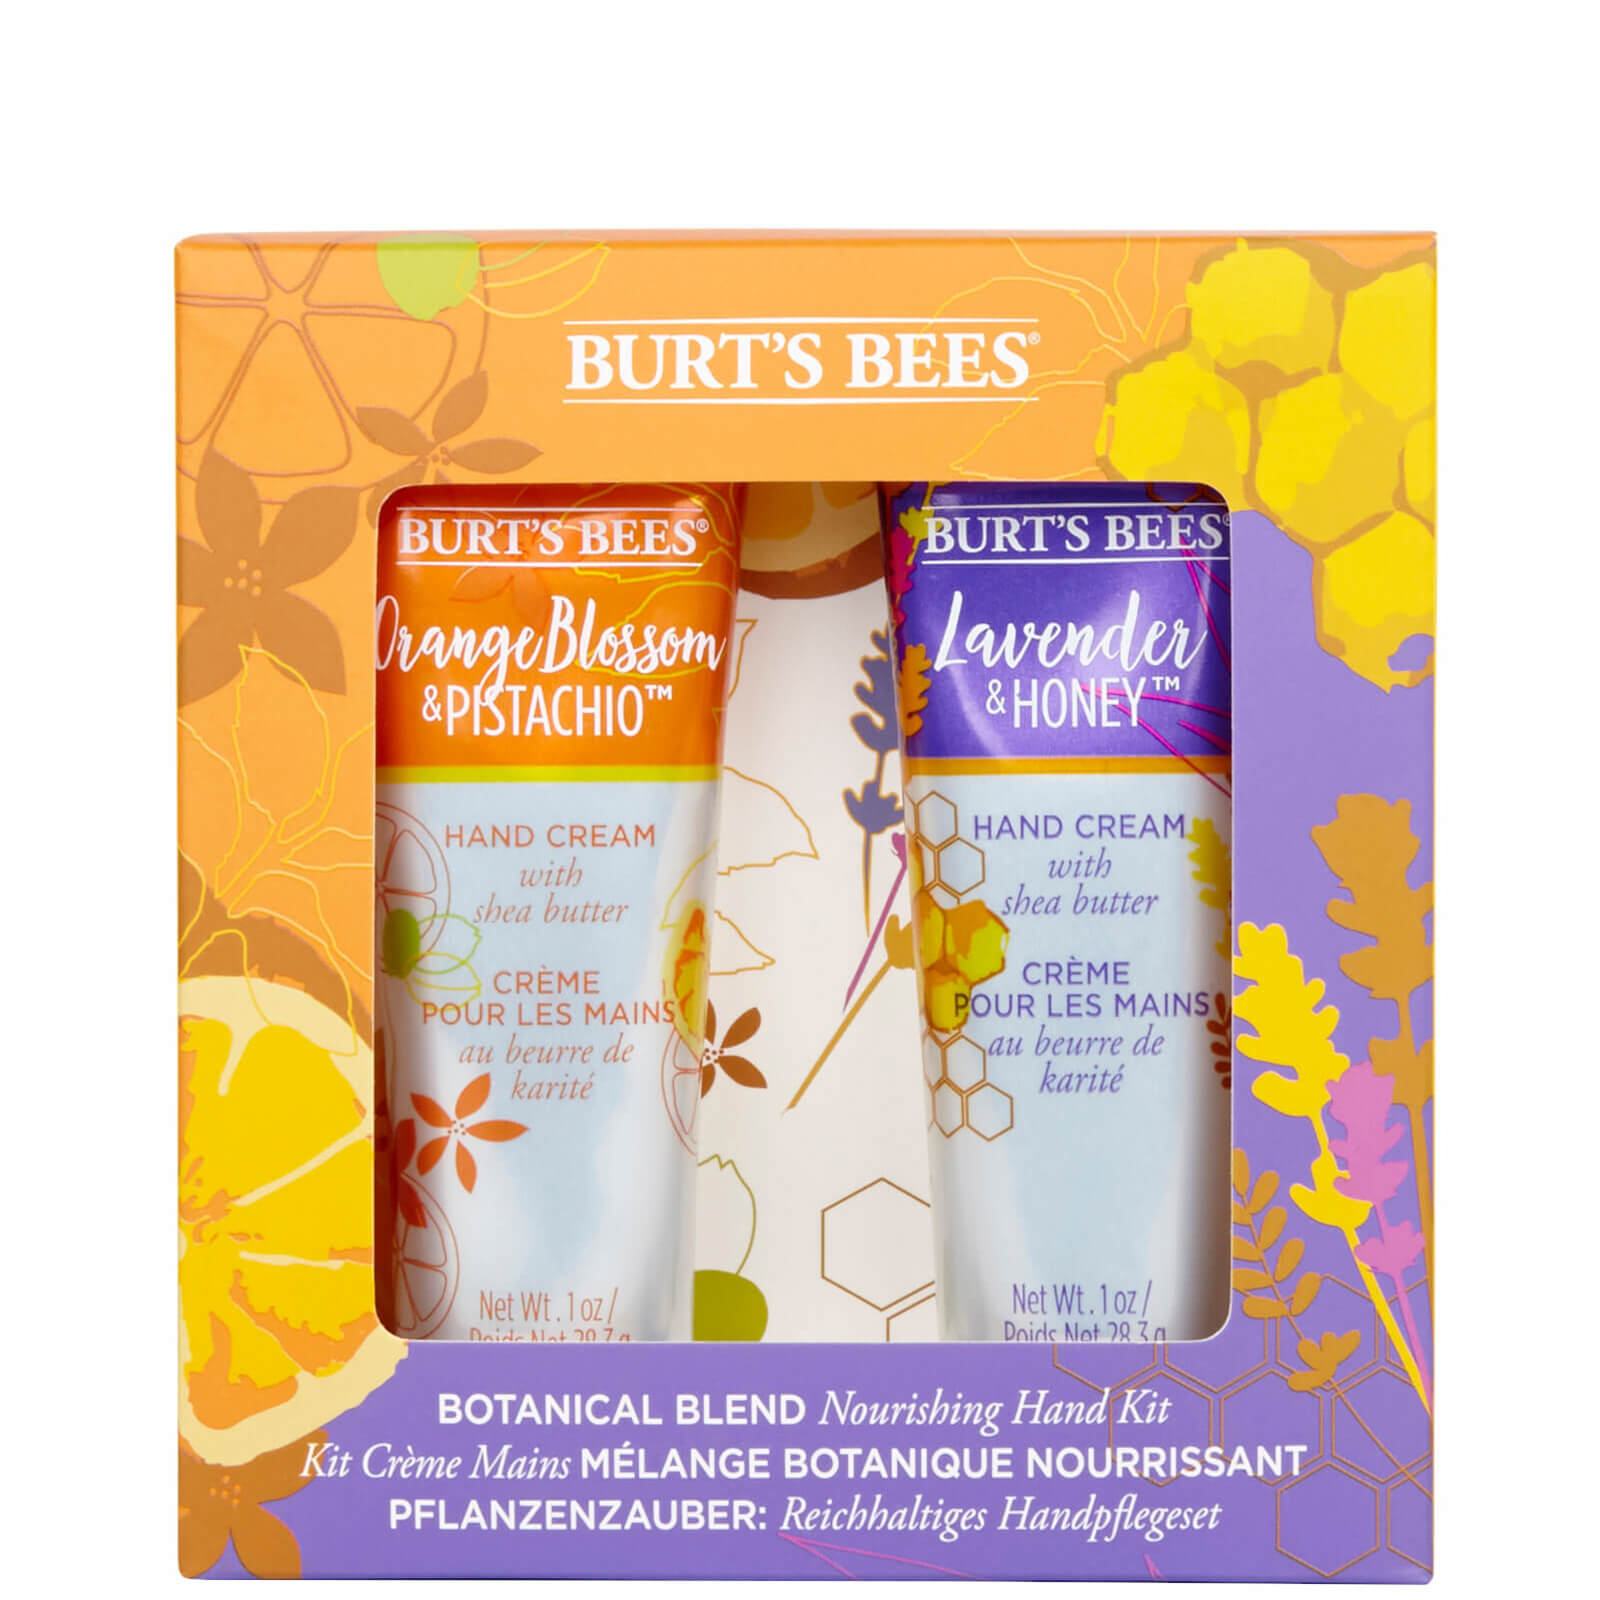 Burt’s Bees Botanical Blend Nourishing Hand Kit lookfantastic.com imagine